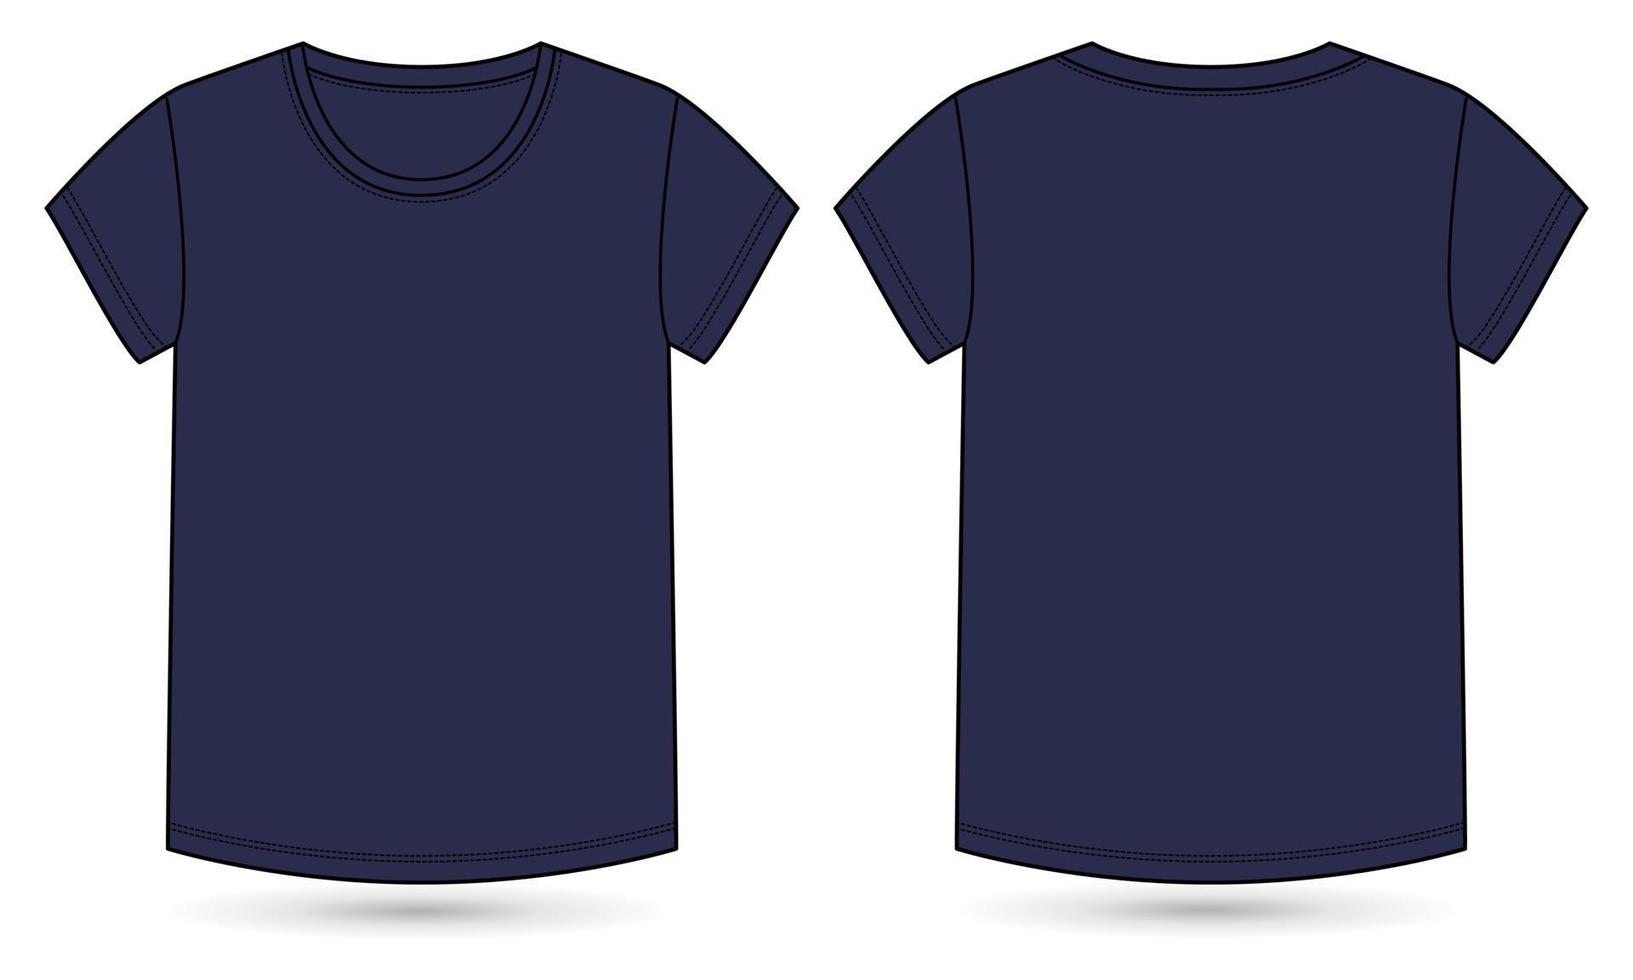 camiseta de manga corta moda técnica boceto plano ilustración vectorial plantilla de color azul marino para damas y niñas vector